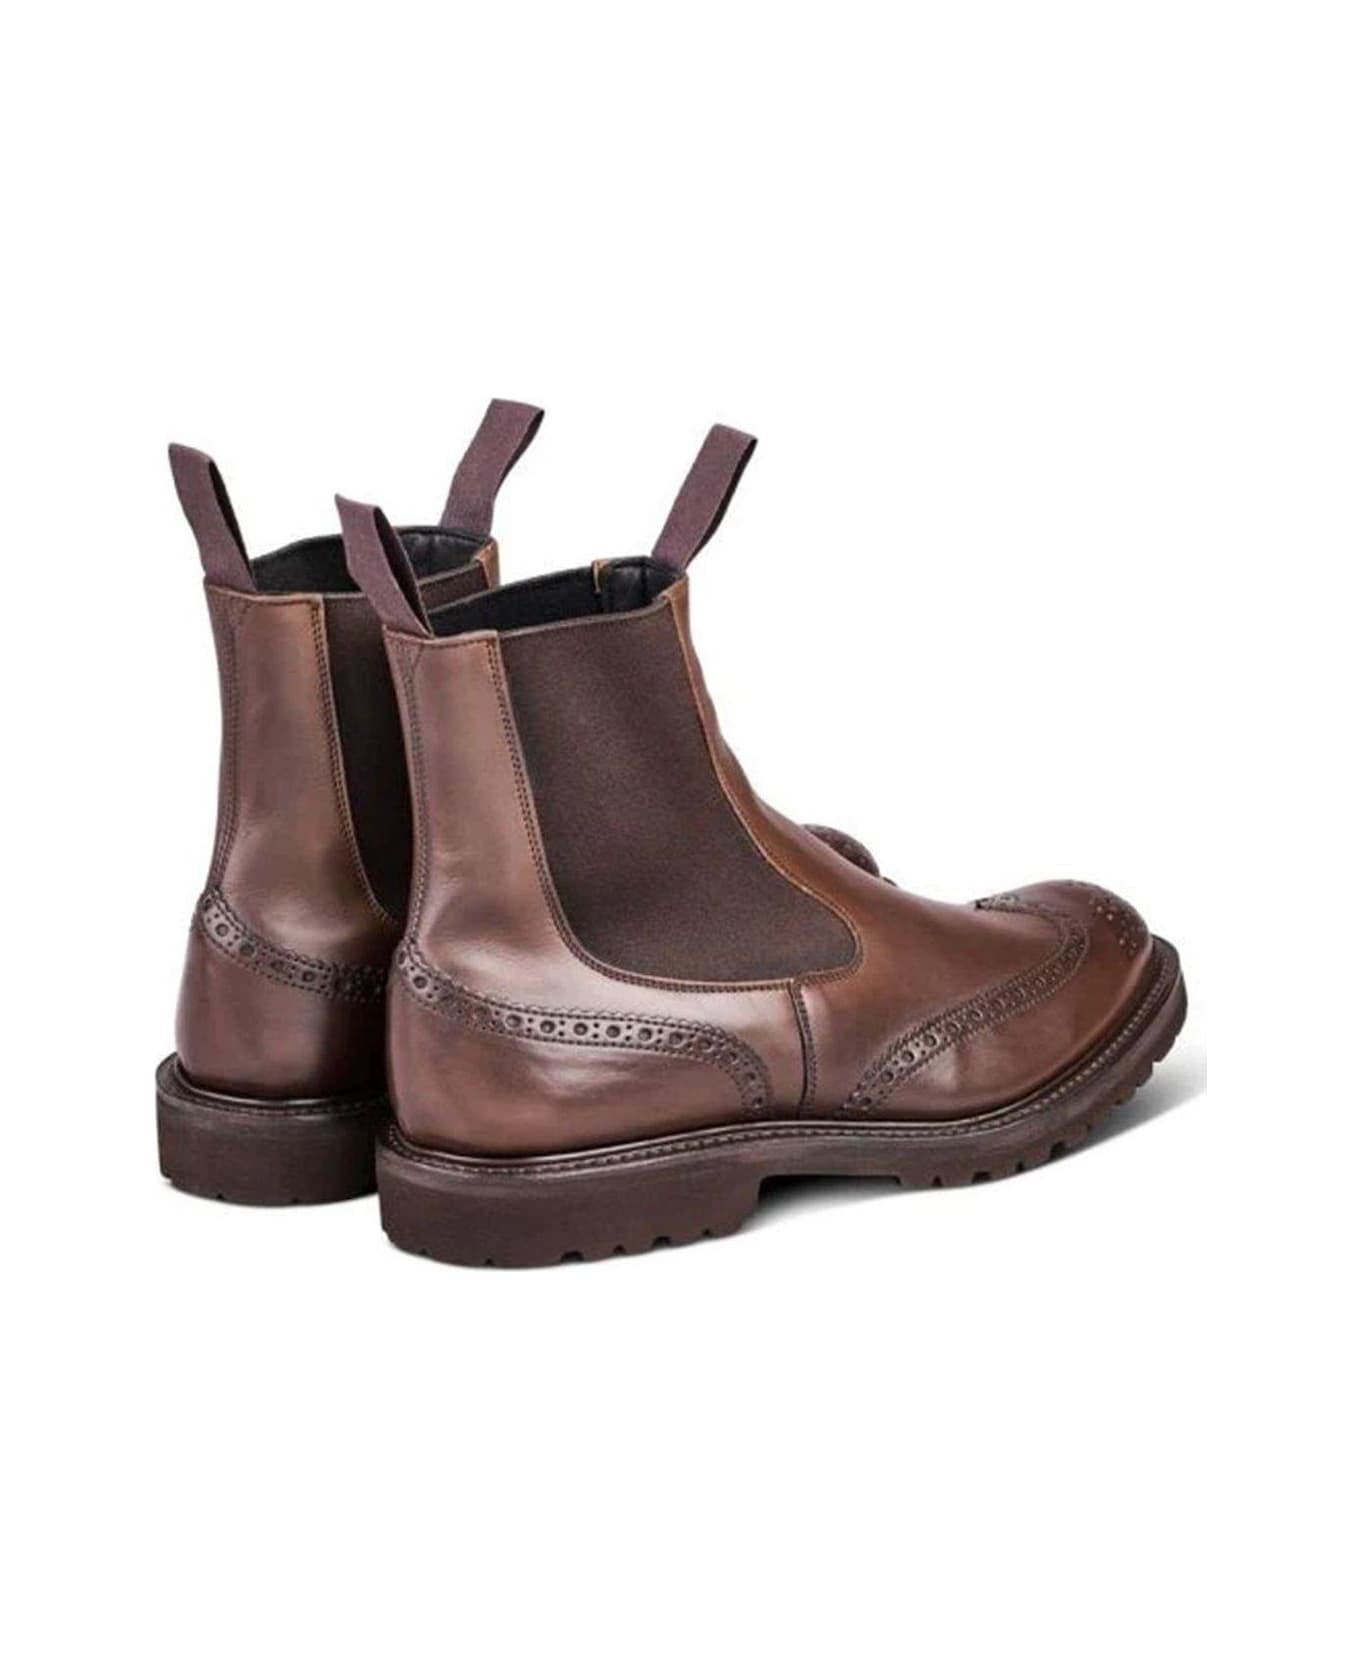 Tricker's Chelsea Slip-on Boots Boots - ESPRESSO